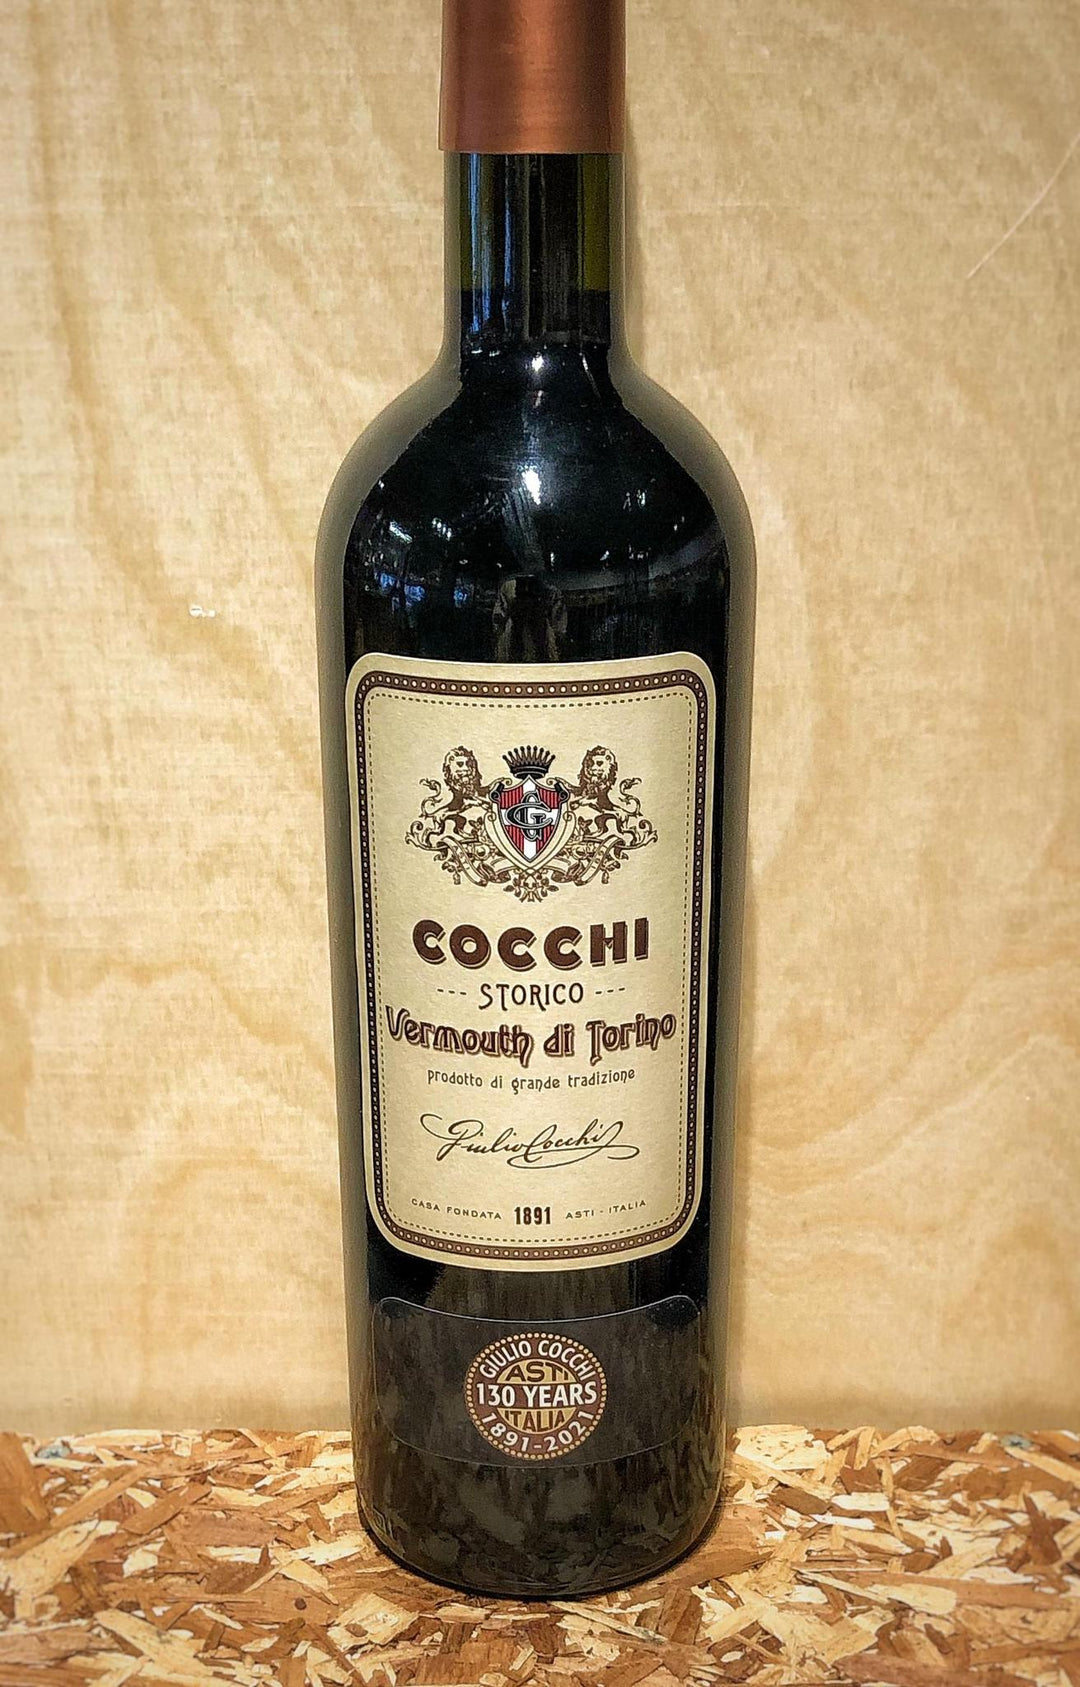 Cocchi 'Vermouth di Torino' NV (Piedmont, Italy)